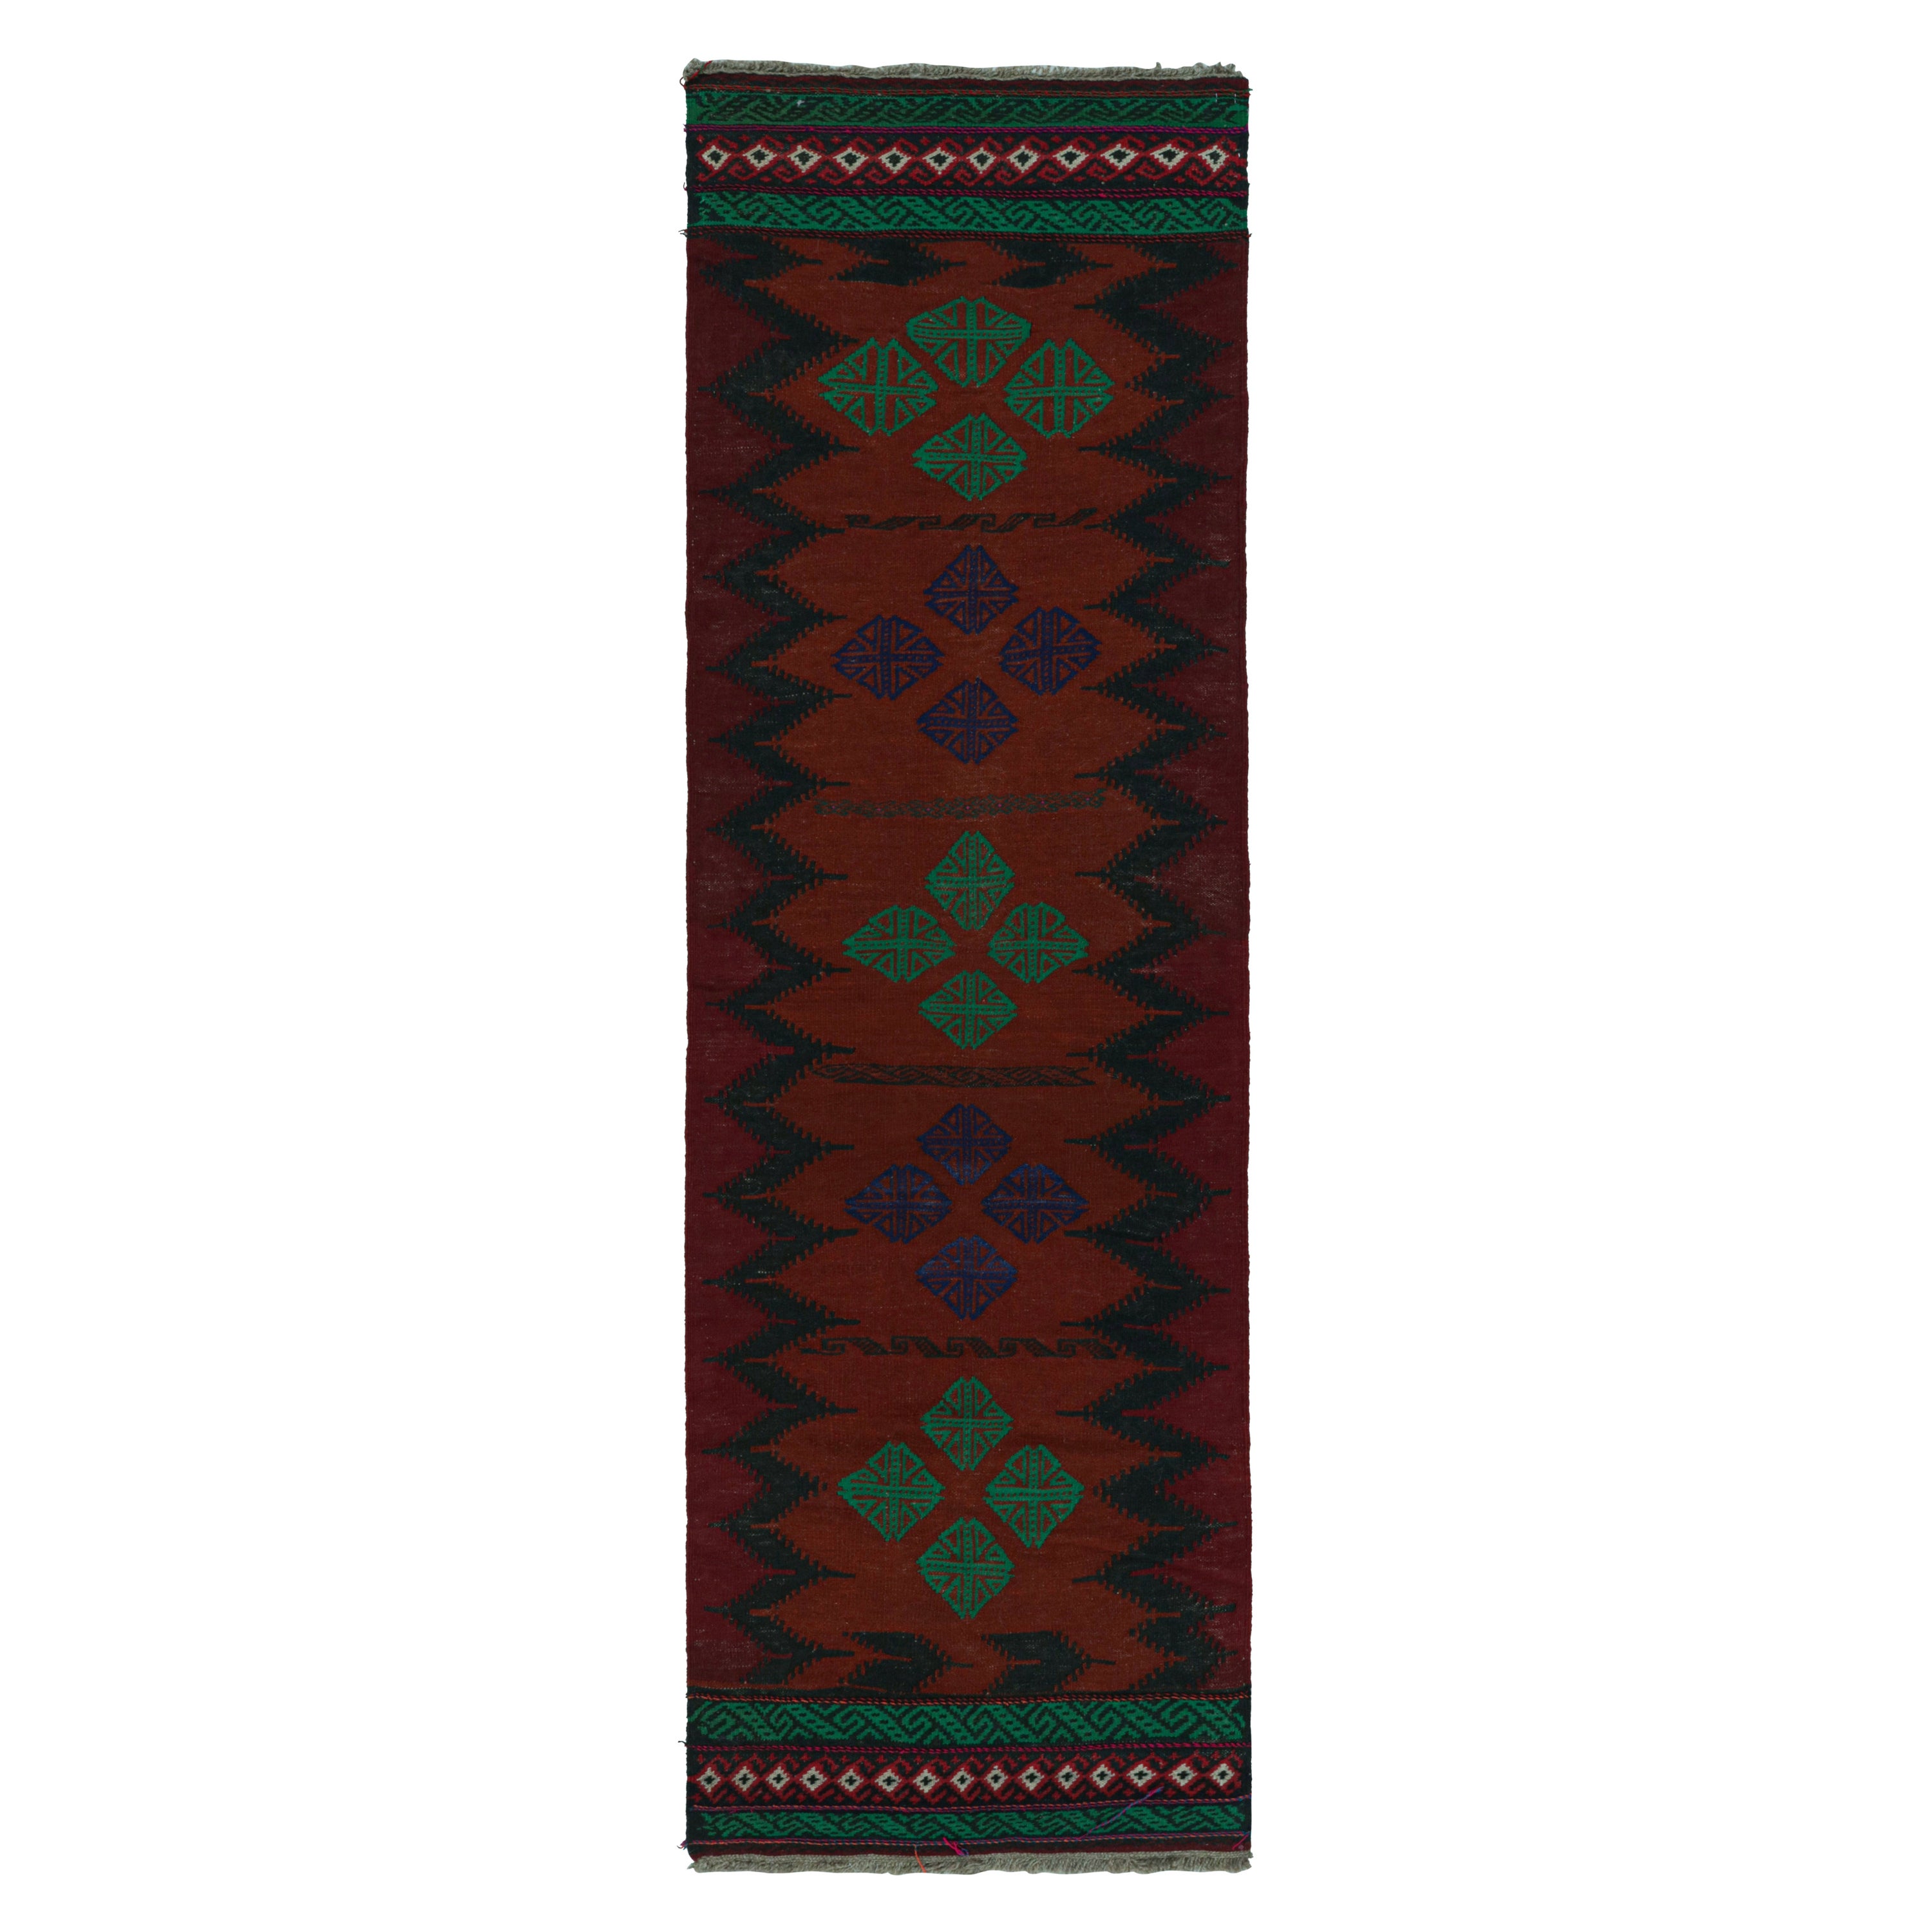 Vintage Afghan Tribal Kilim in Rust Tones Geometric Patterns, from Rug & Kilim For Sale